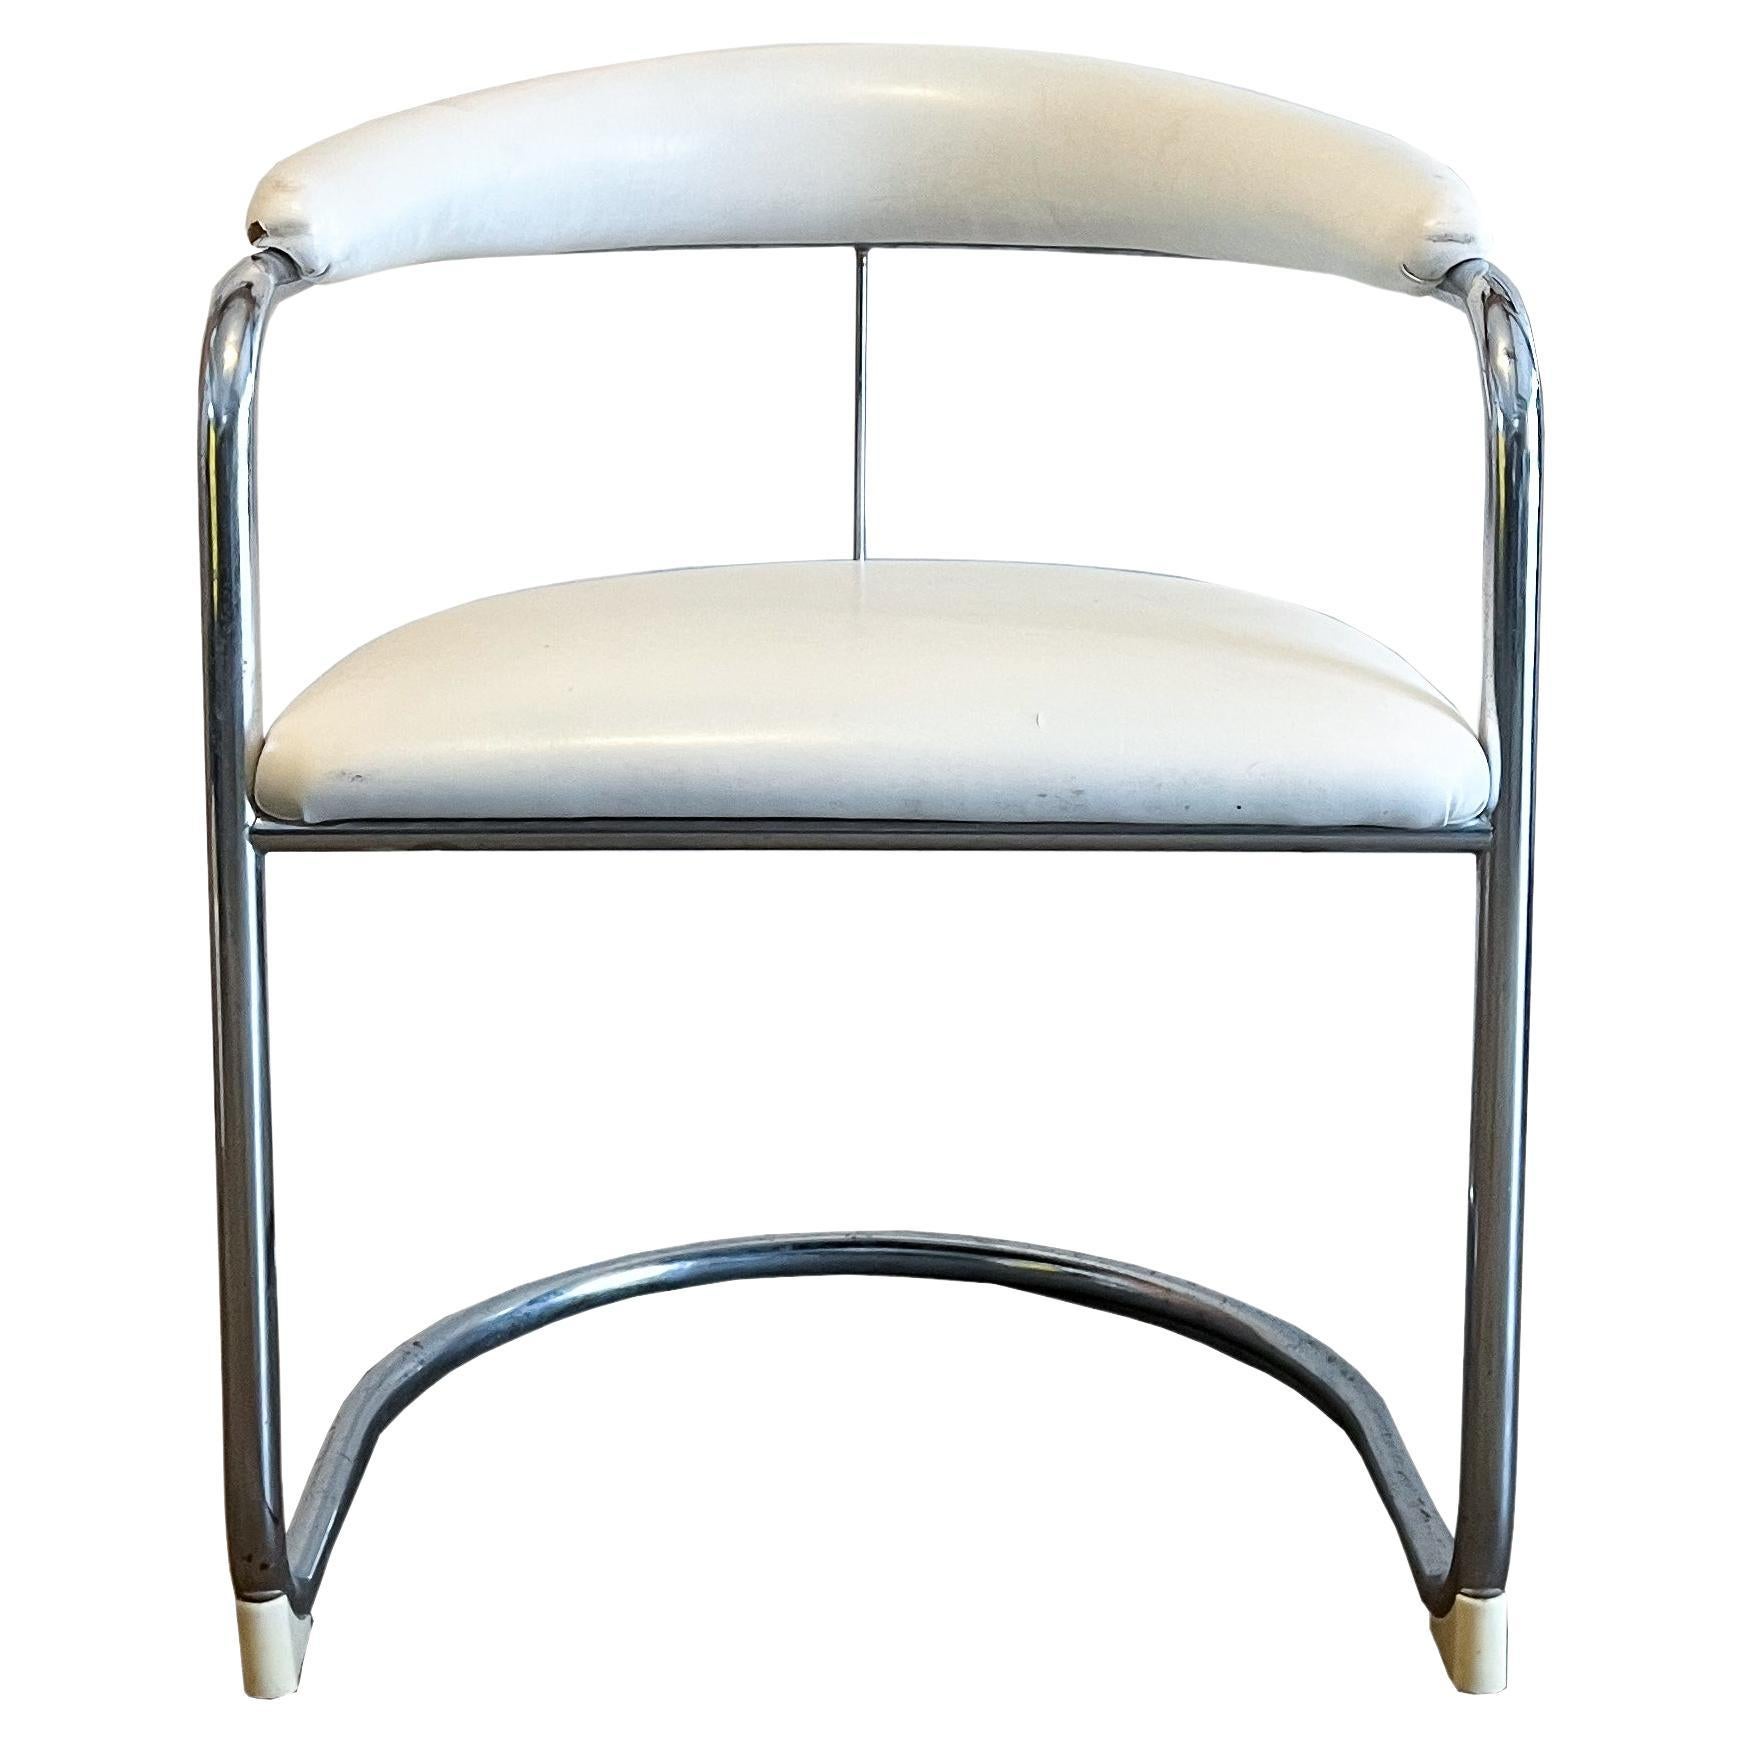 White Vinyl & Chrome Model SS33 Style Cantilever Chair